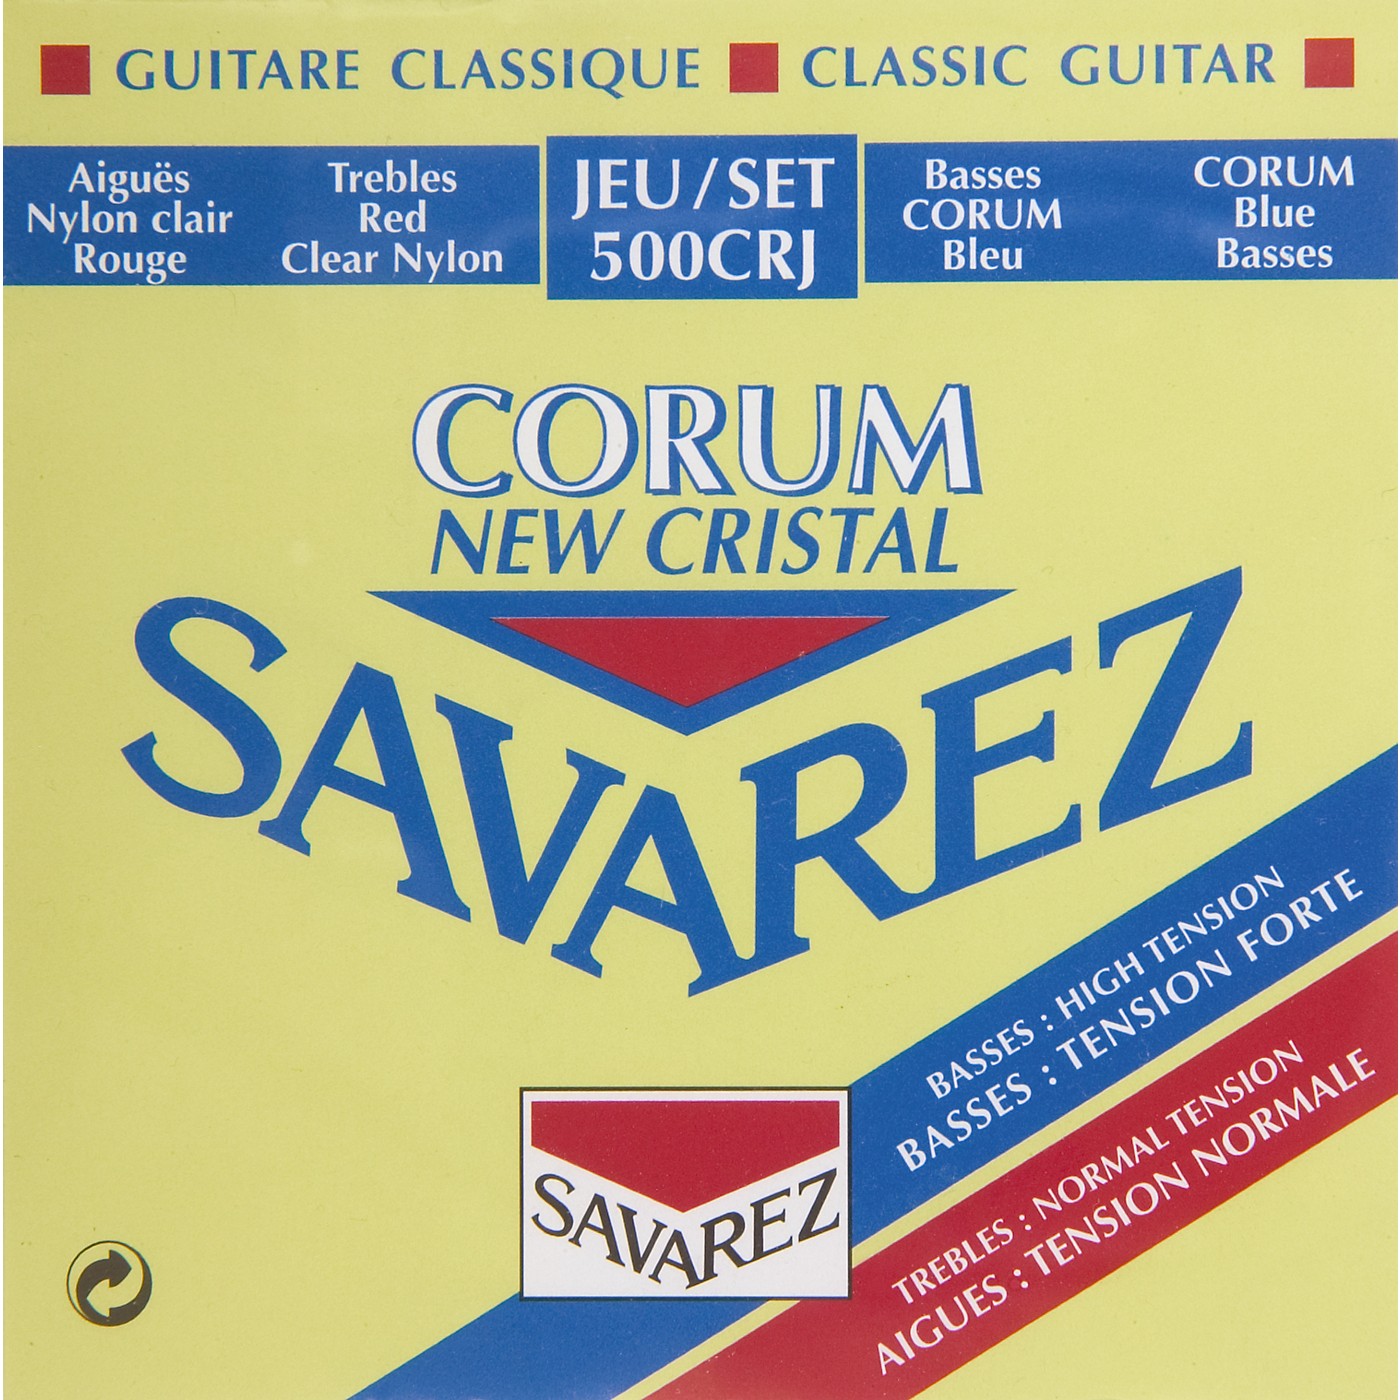 Savarez 500CRJ Corum Cristal Classic Guitar Strings thumbnail